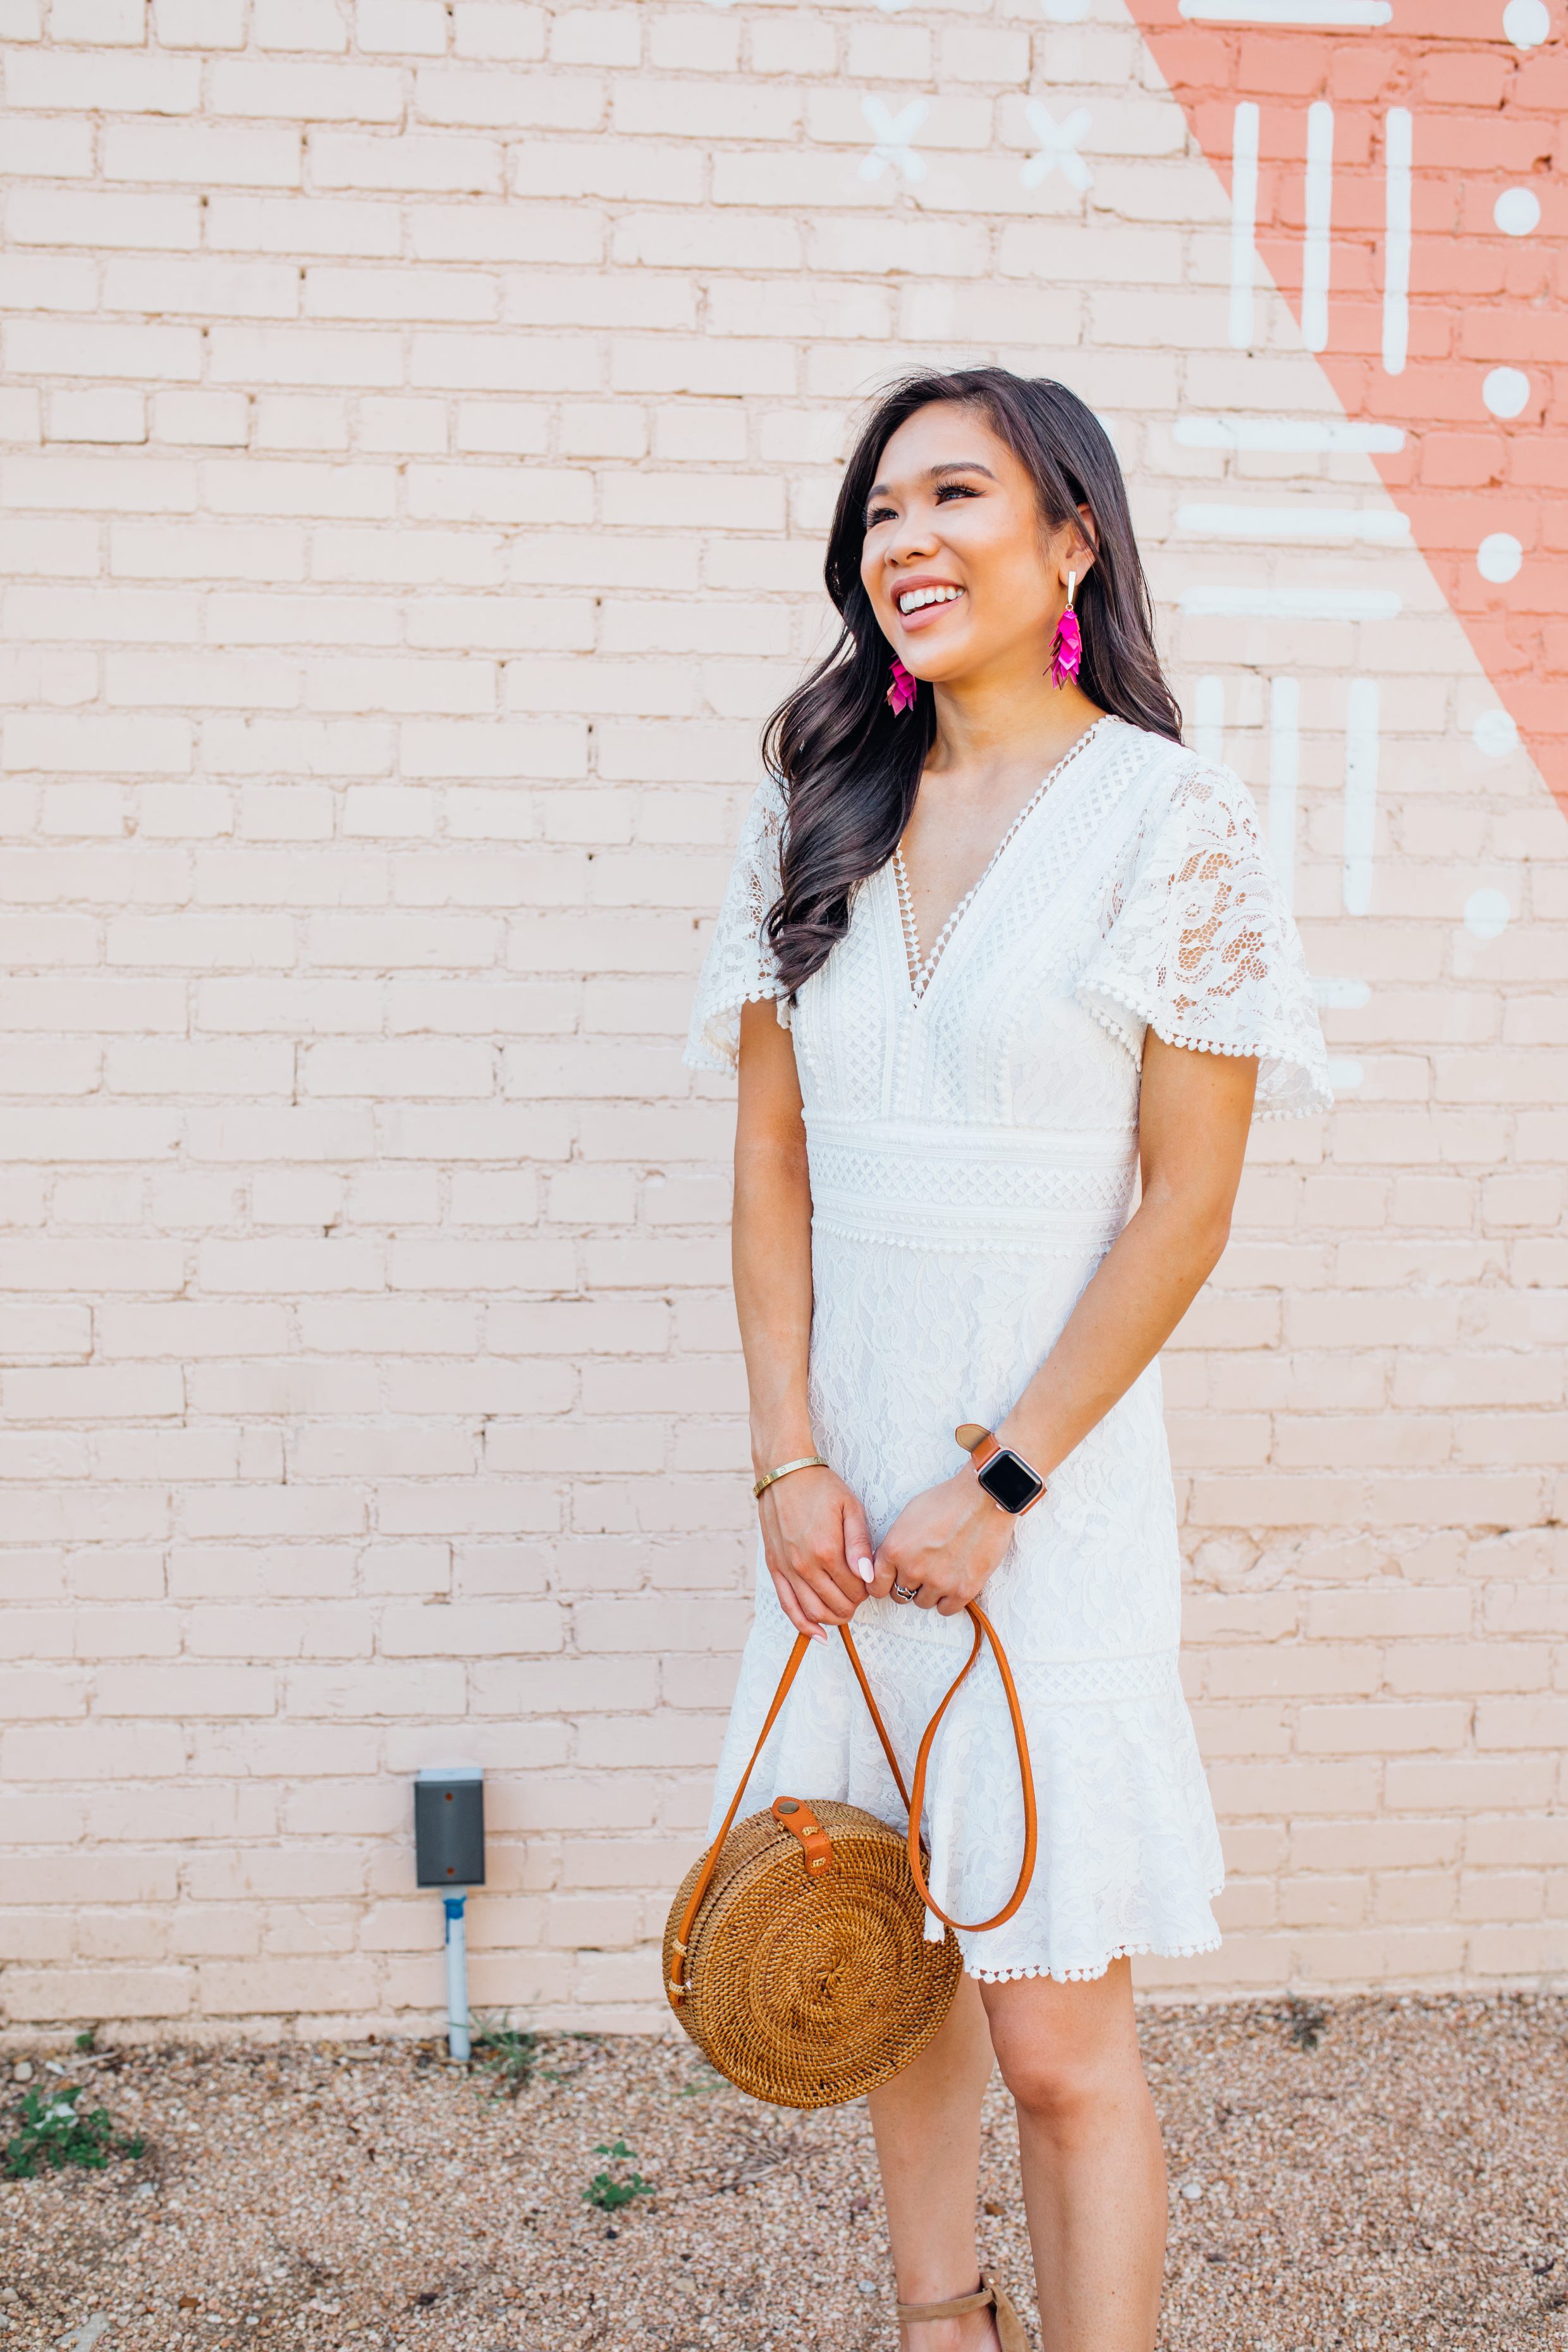 Blogger Hoang-Kim wears Kendra Scott Jennifer earrings in pink mix with a white lace dress